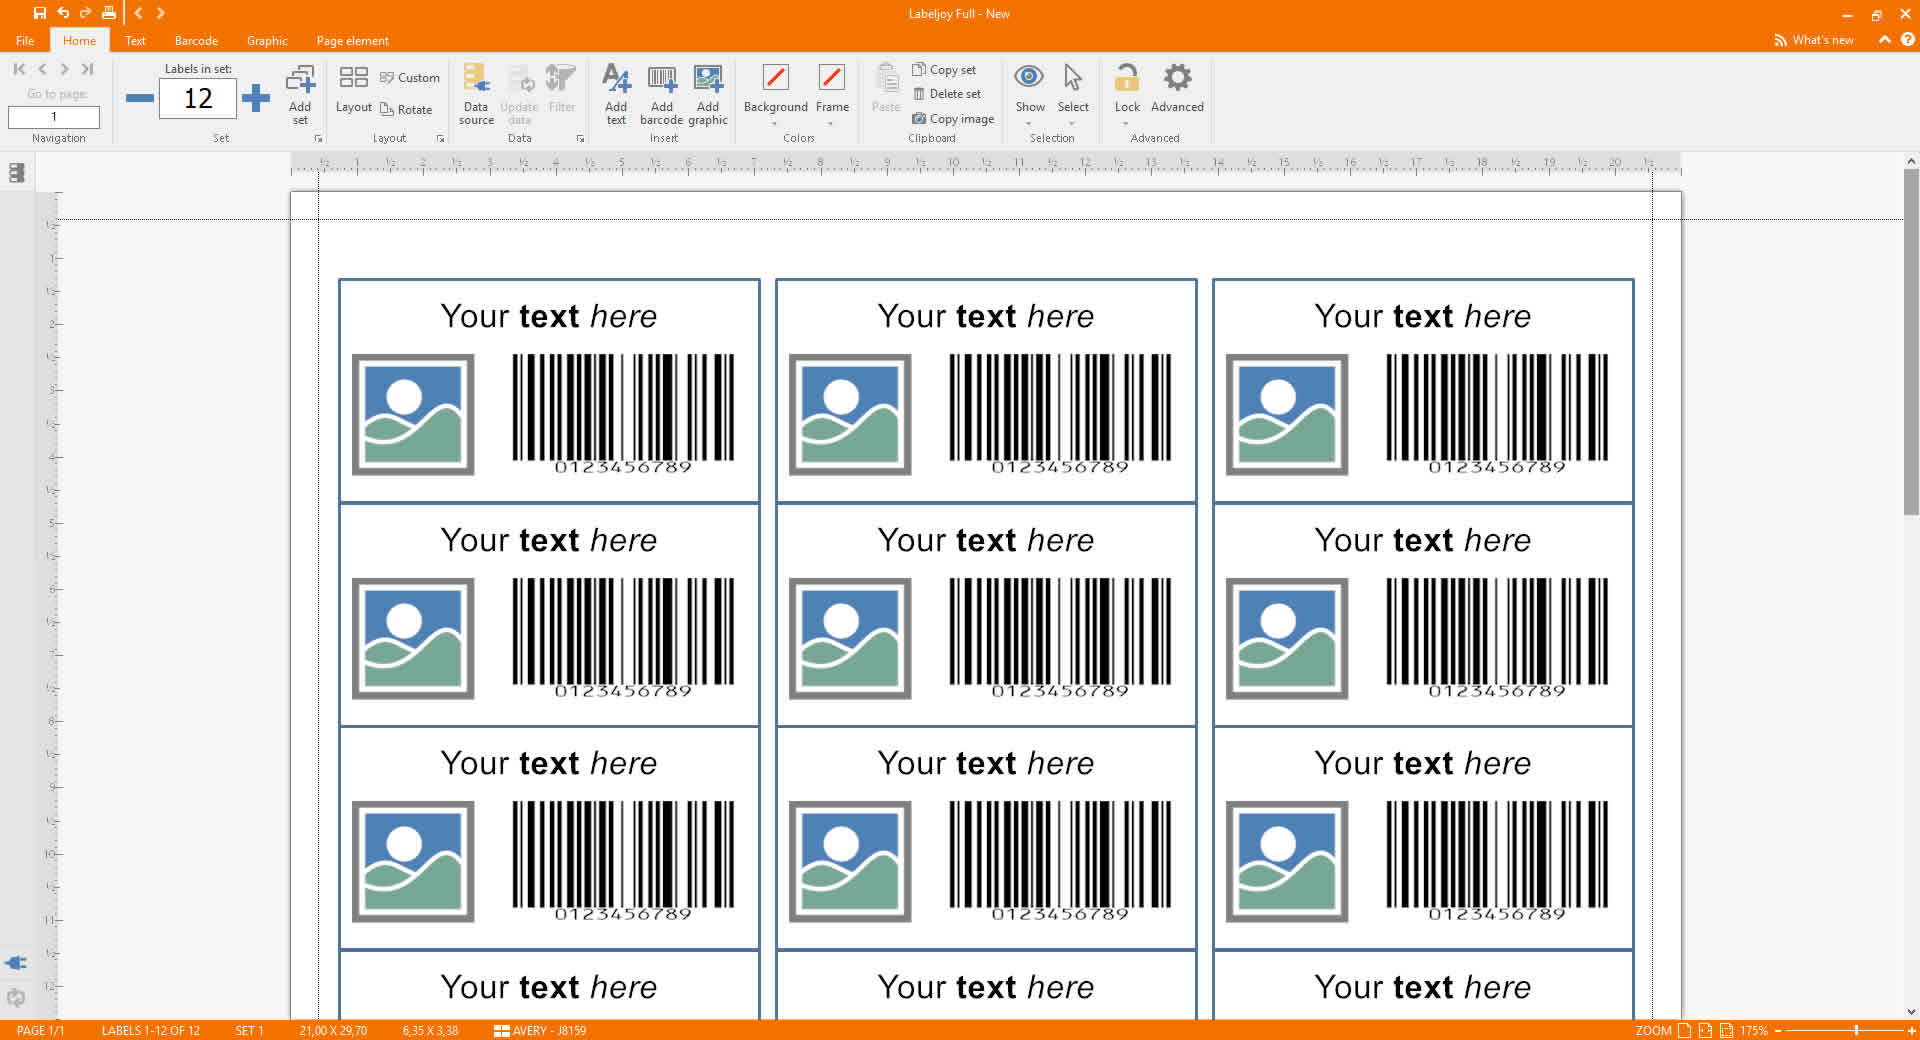 Barcode Generator Software « Labeljoy | Labels printing Software